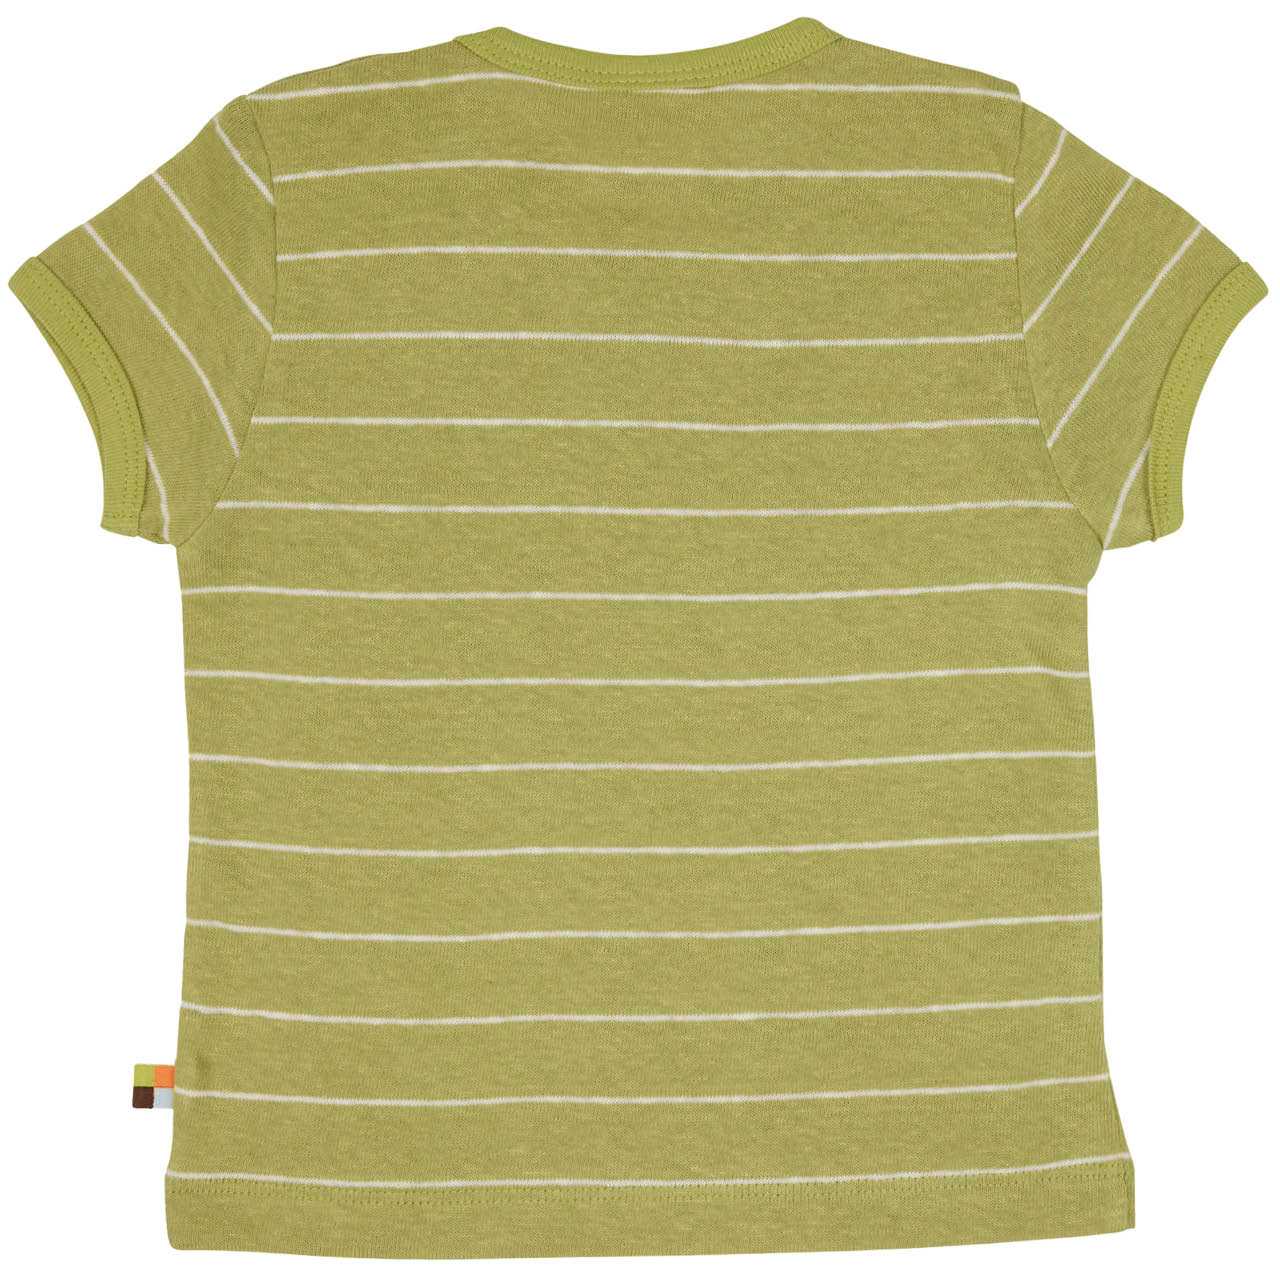 Leichtes Leinen Shirt kurzarm hellgrün geringelt